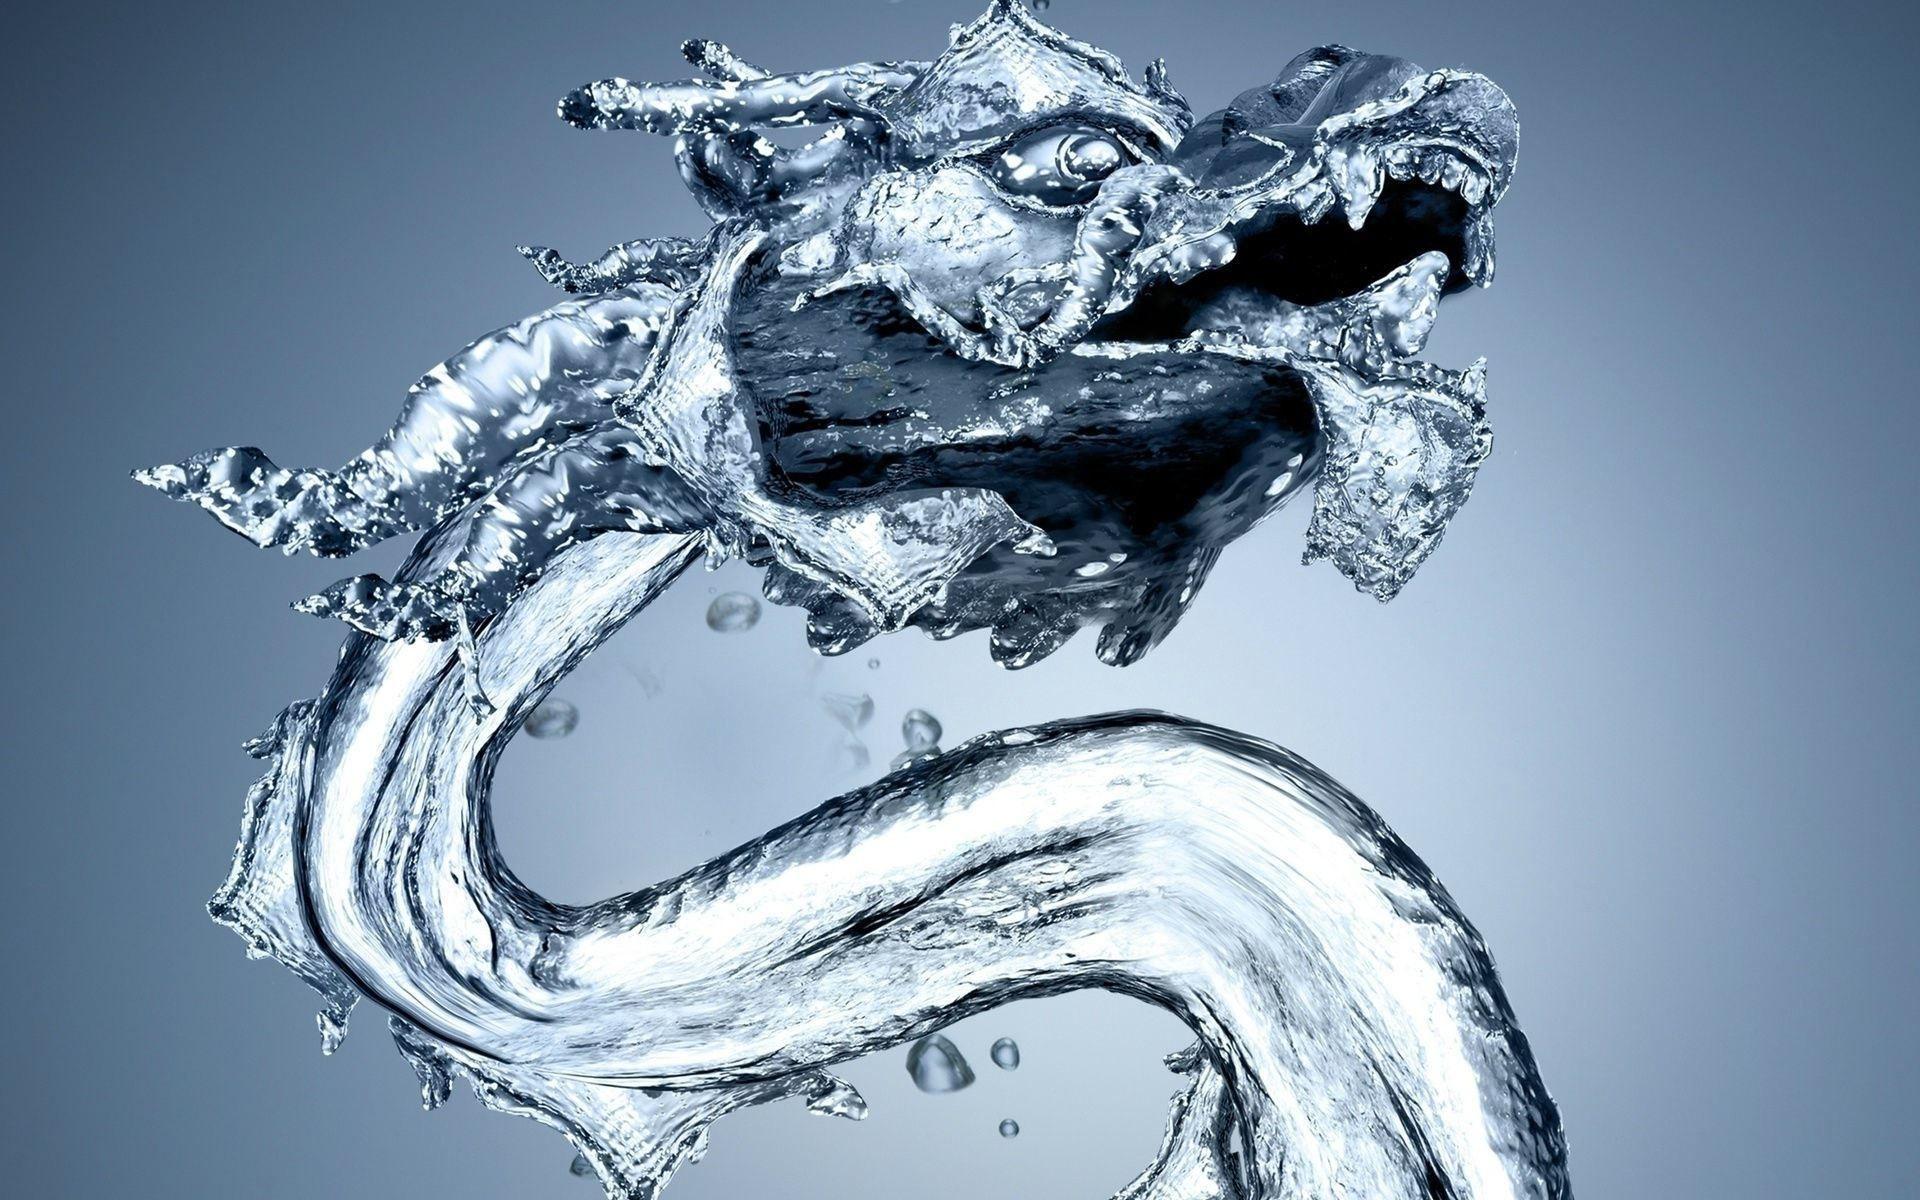 Water Dragon Cool Logo - Water Dragon wallpapers | Water Dragon stock photos